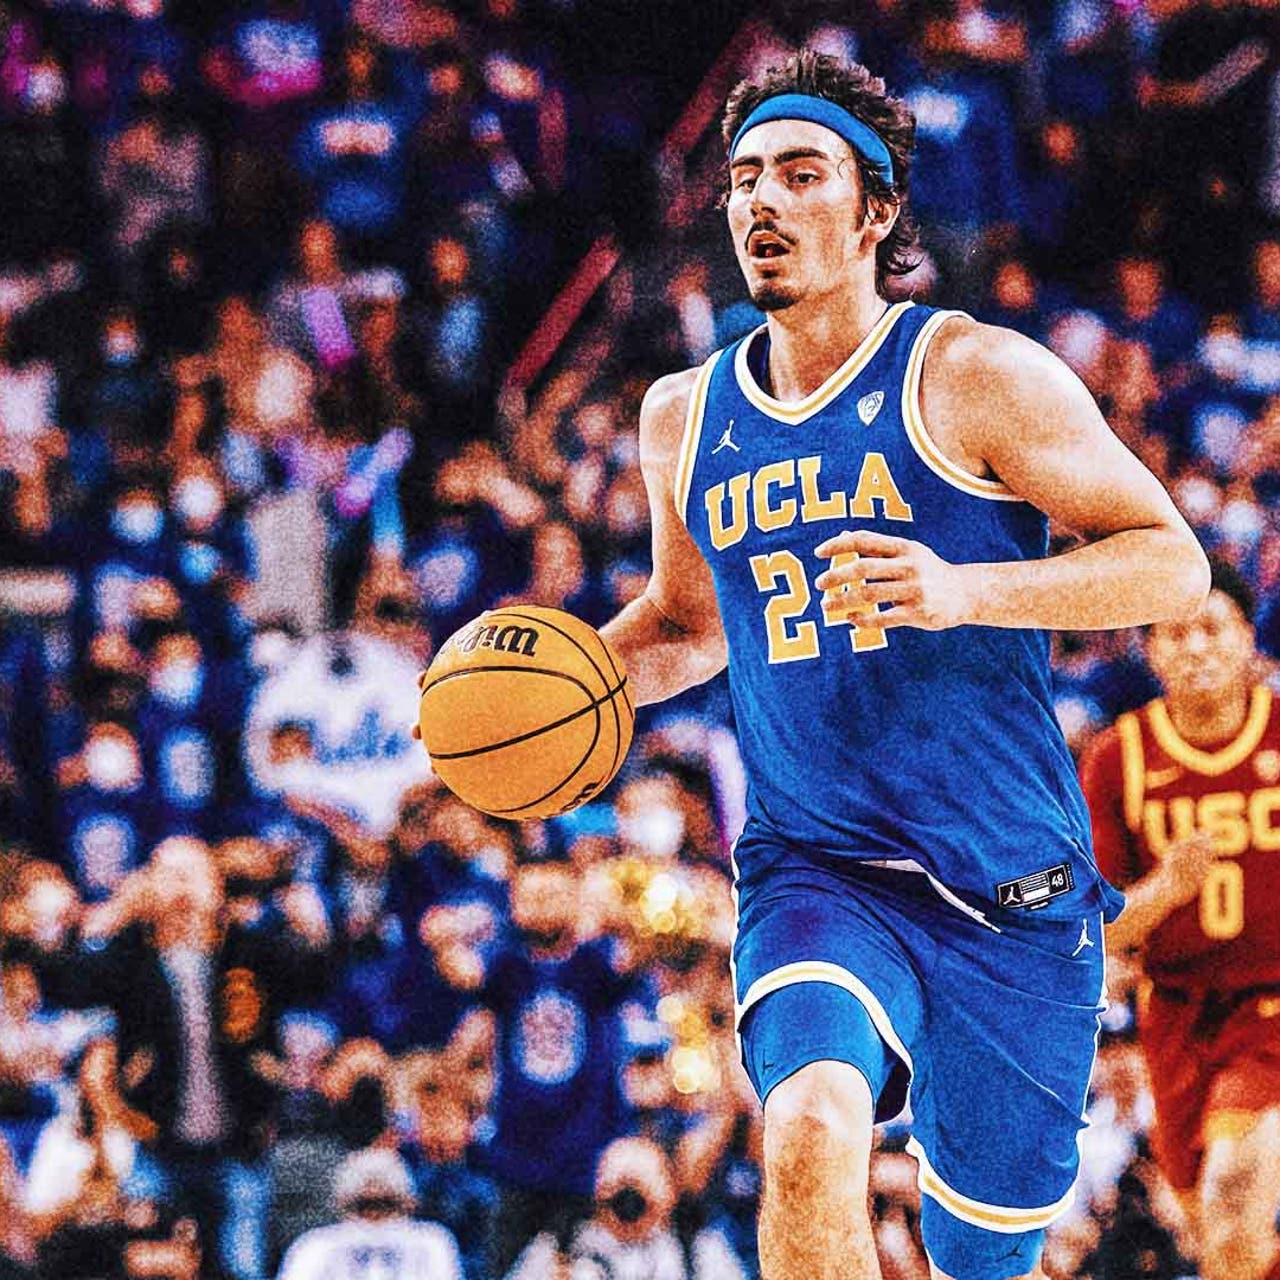 The basketball legacy of UCLA's Gabriela and Jaime Jaquez - ESPN